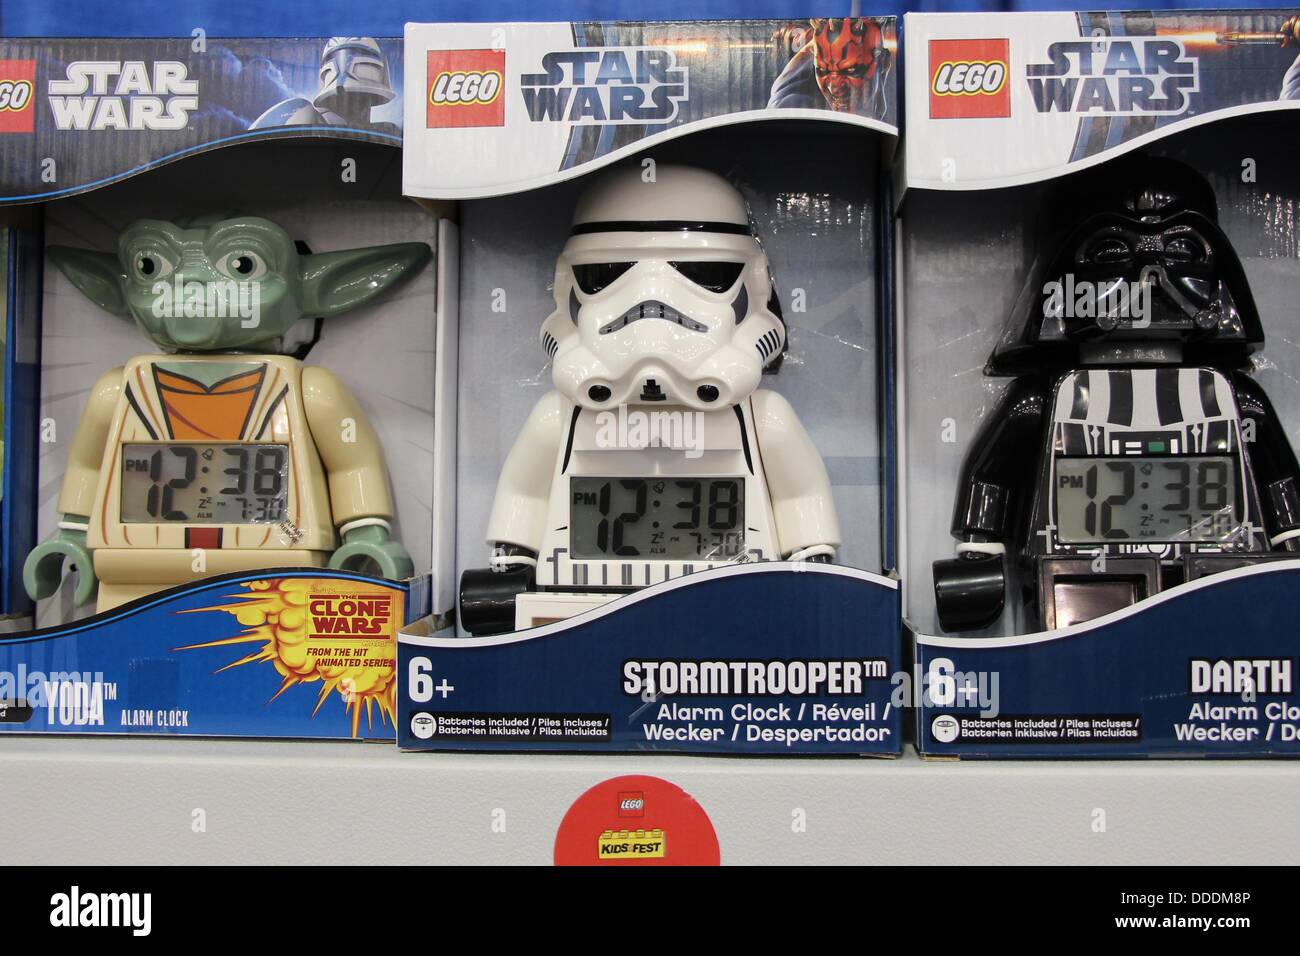 LEGO Star War alarm clocks for sale. Stock Photo